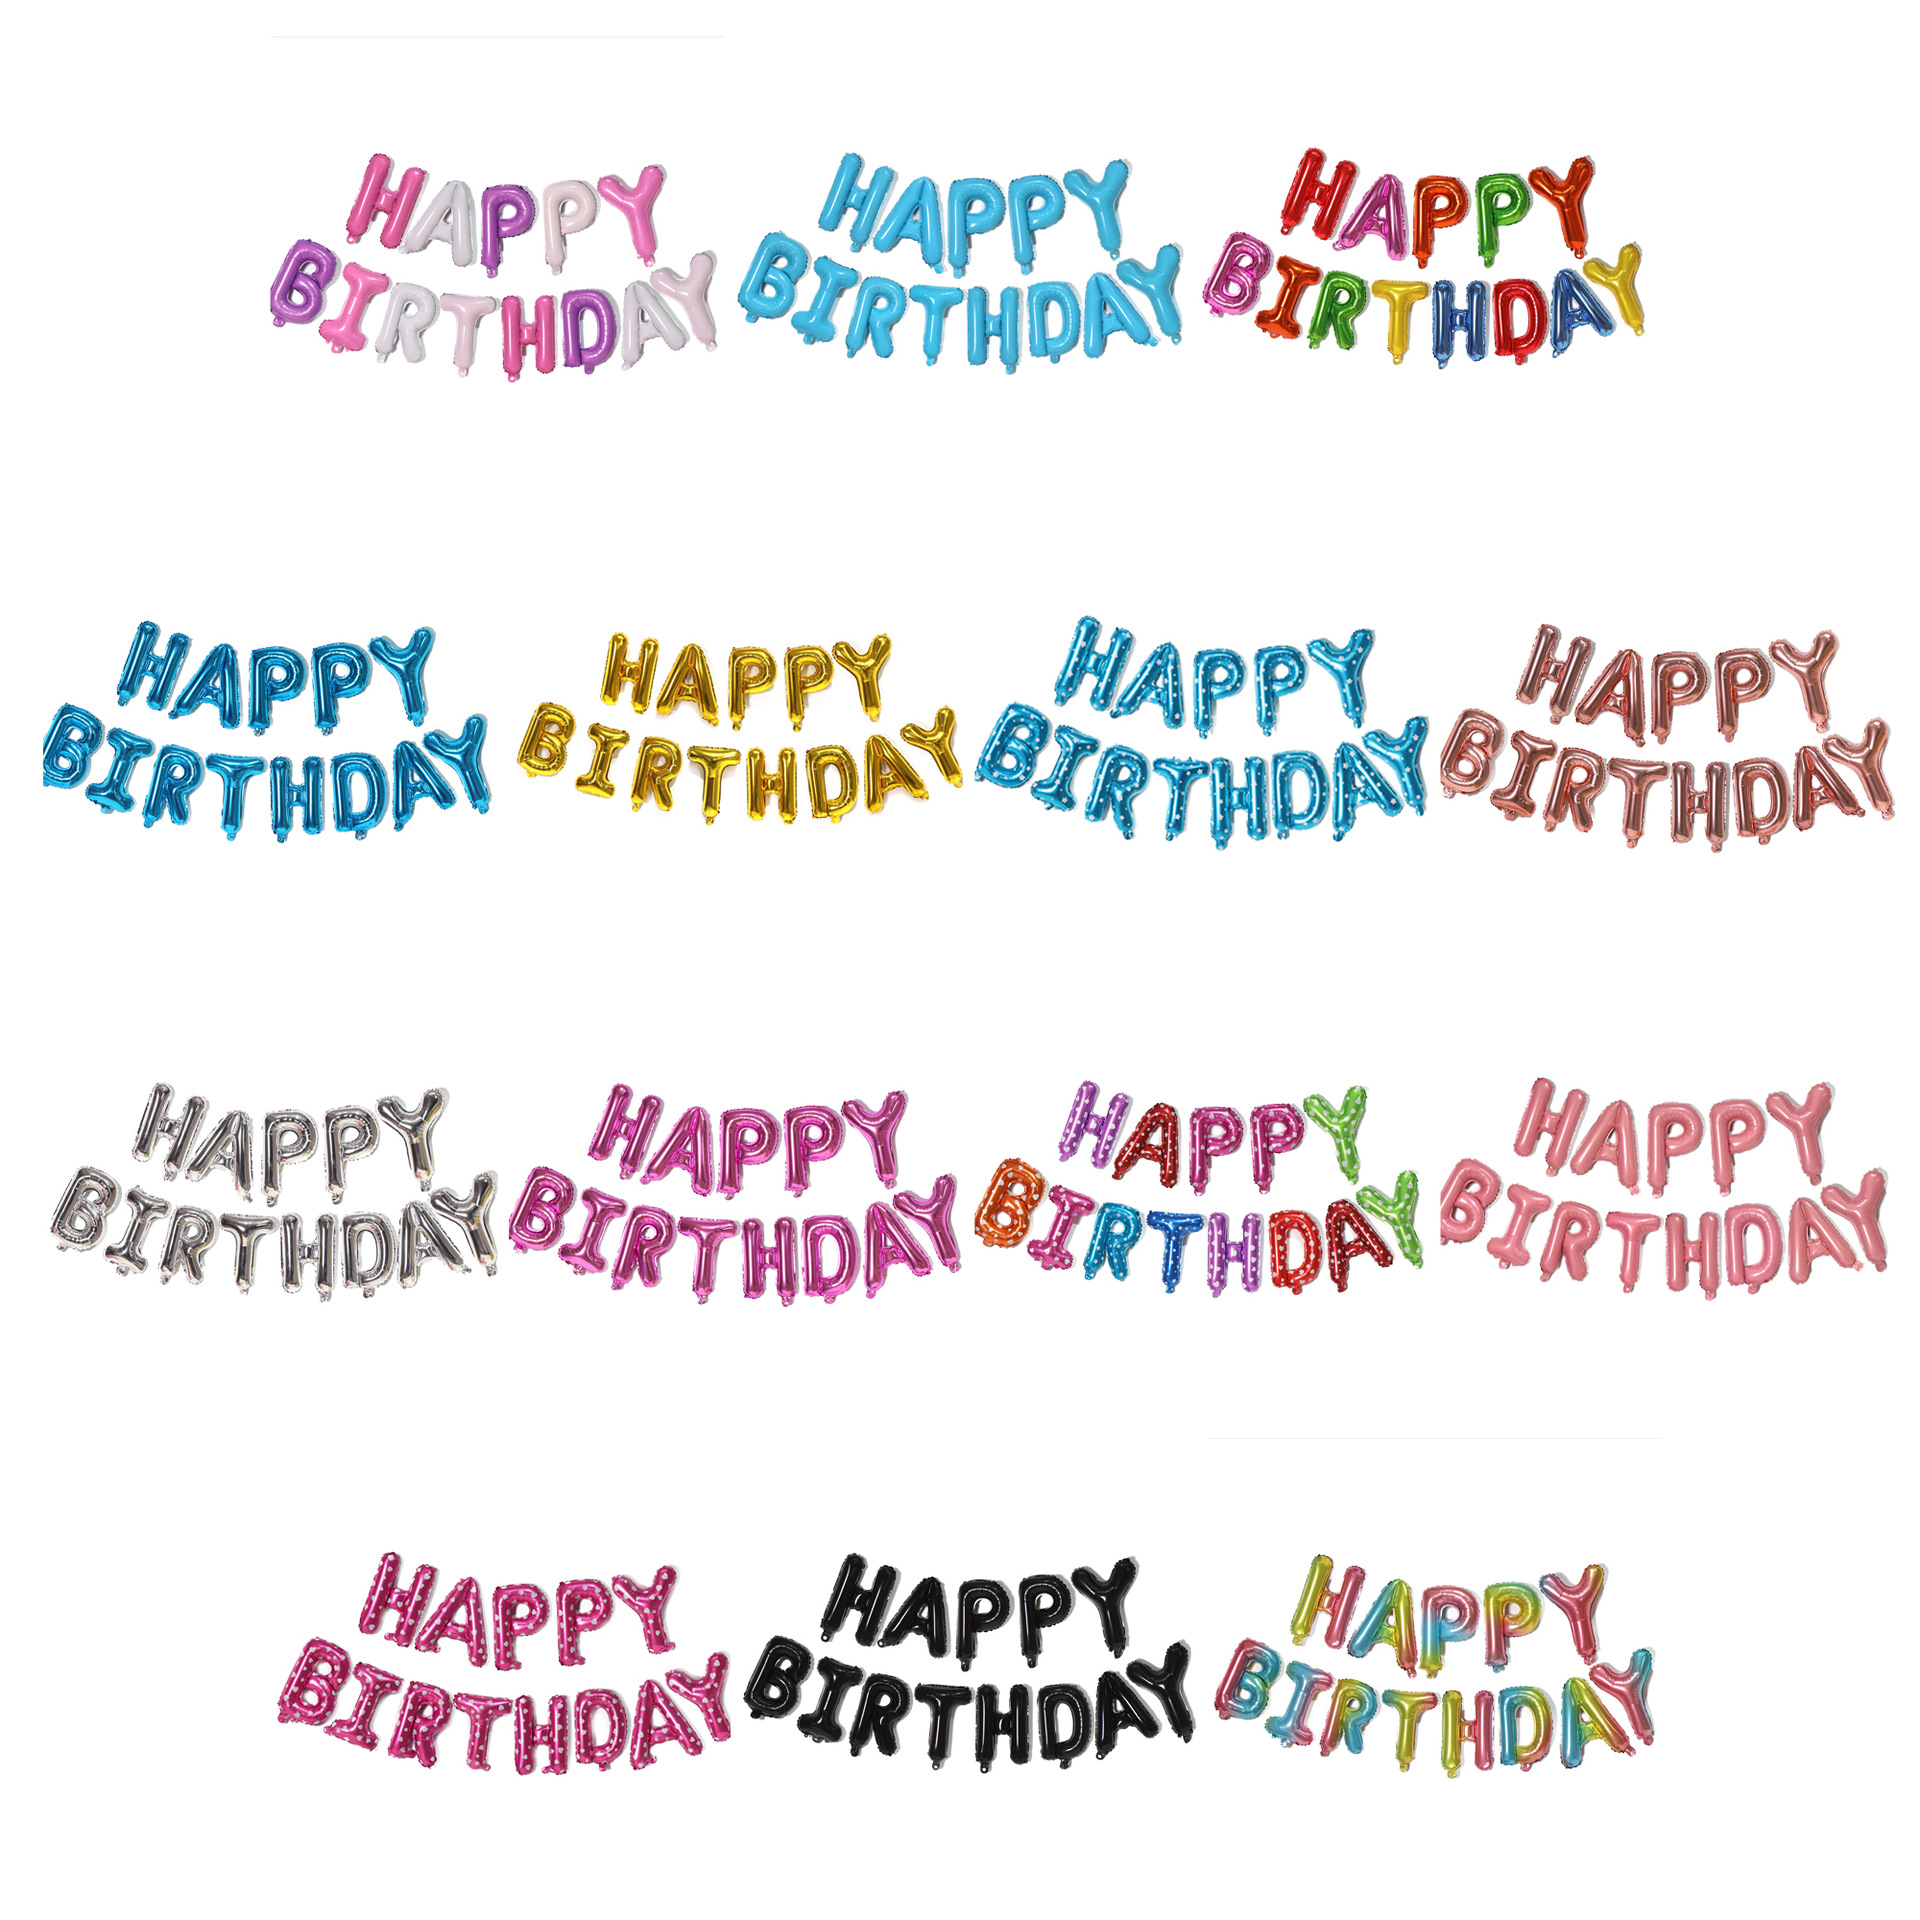 跨境16寸字母铝膜气球 生日快乐气球套装 happy birthday铝箔气球图